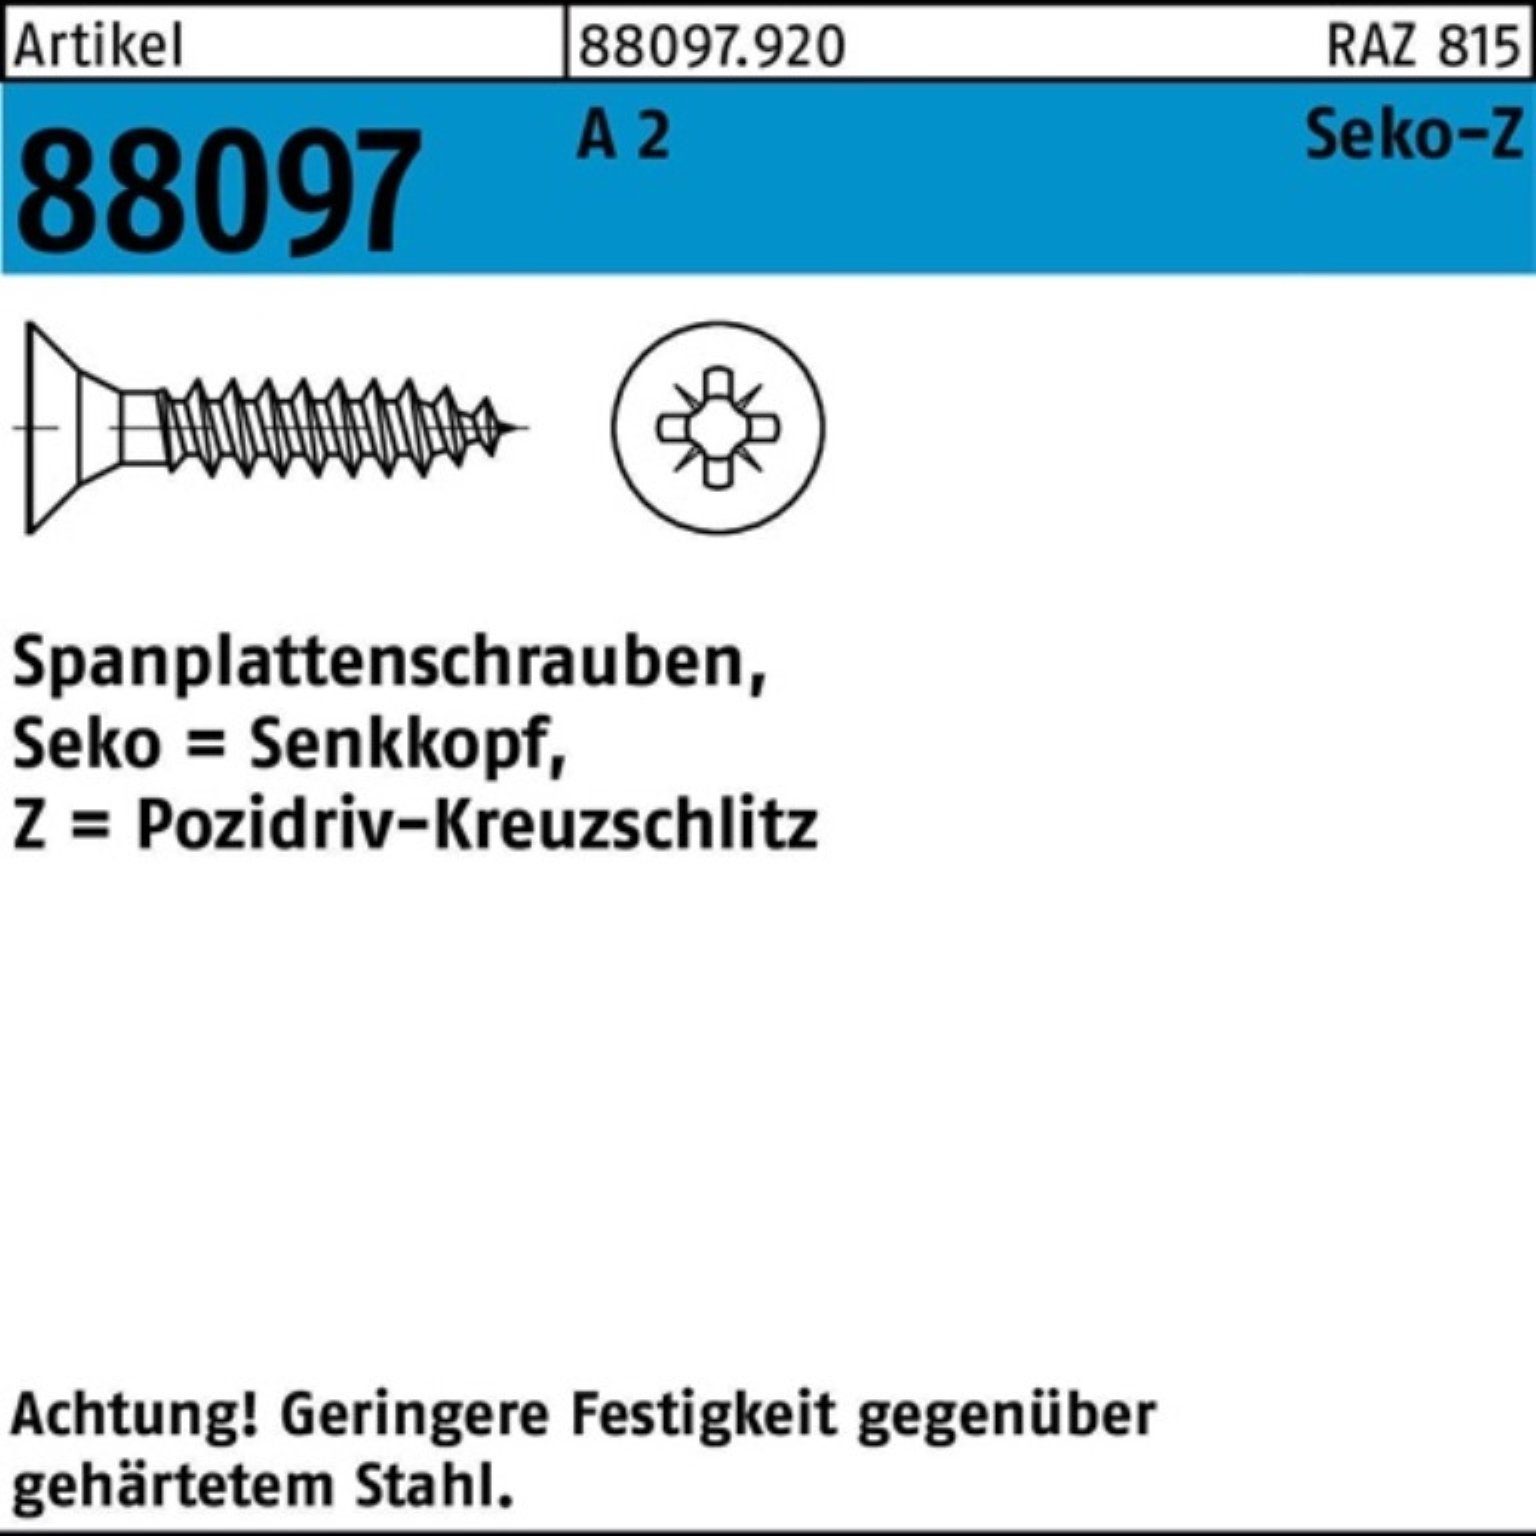 Reyher Pack PZ 200er 30-Z 2 Spanplattenschraube A 200 4,5x Stüc R Seko 88097 Spanplattenschraube